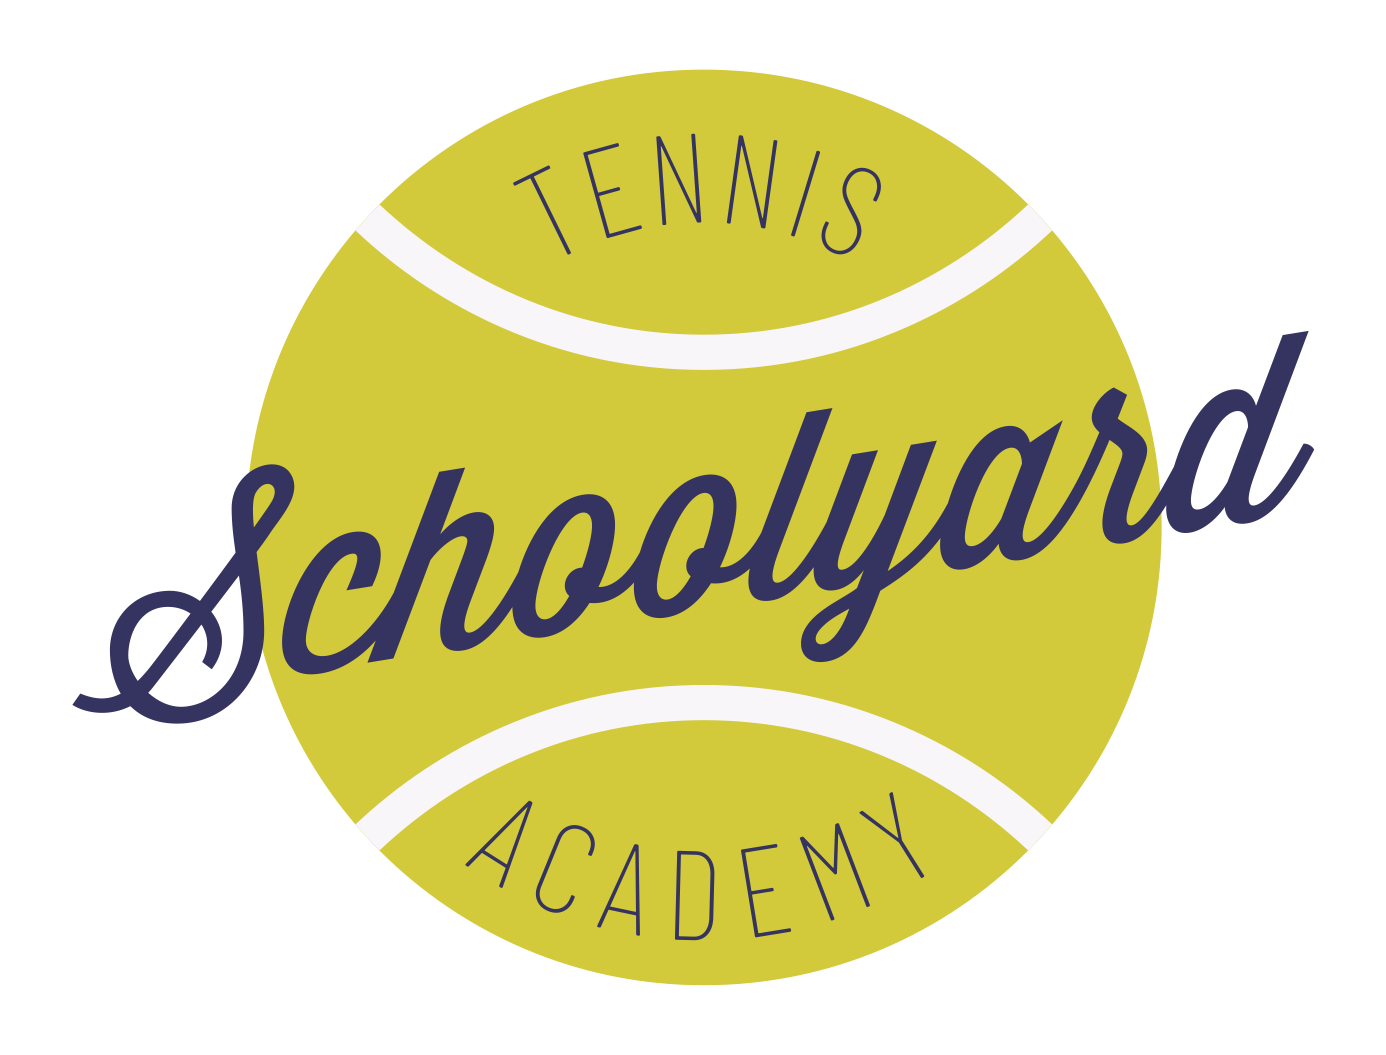 Schoolyard Tennis & Pickleball Academy